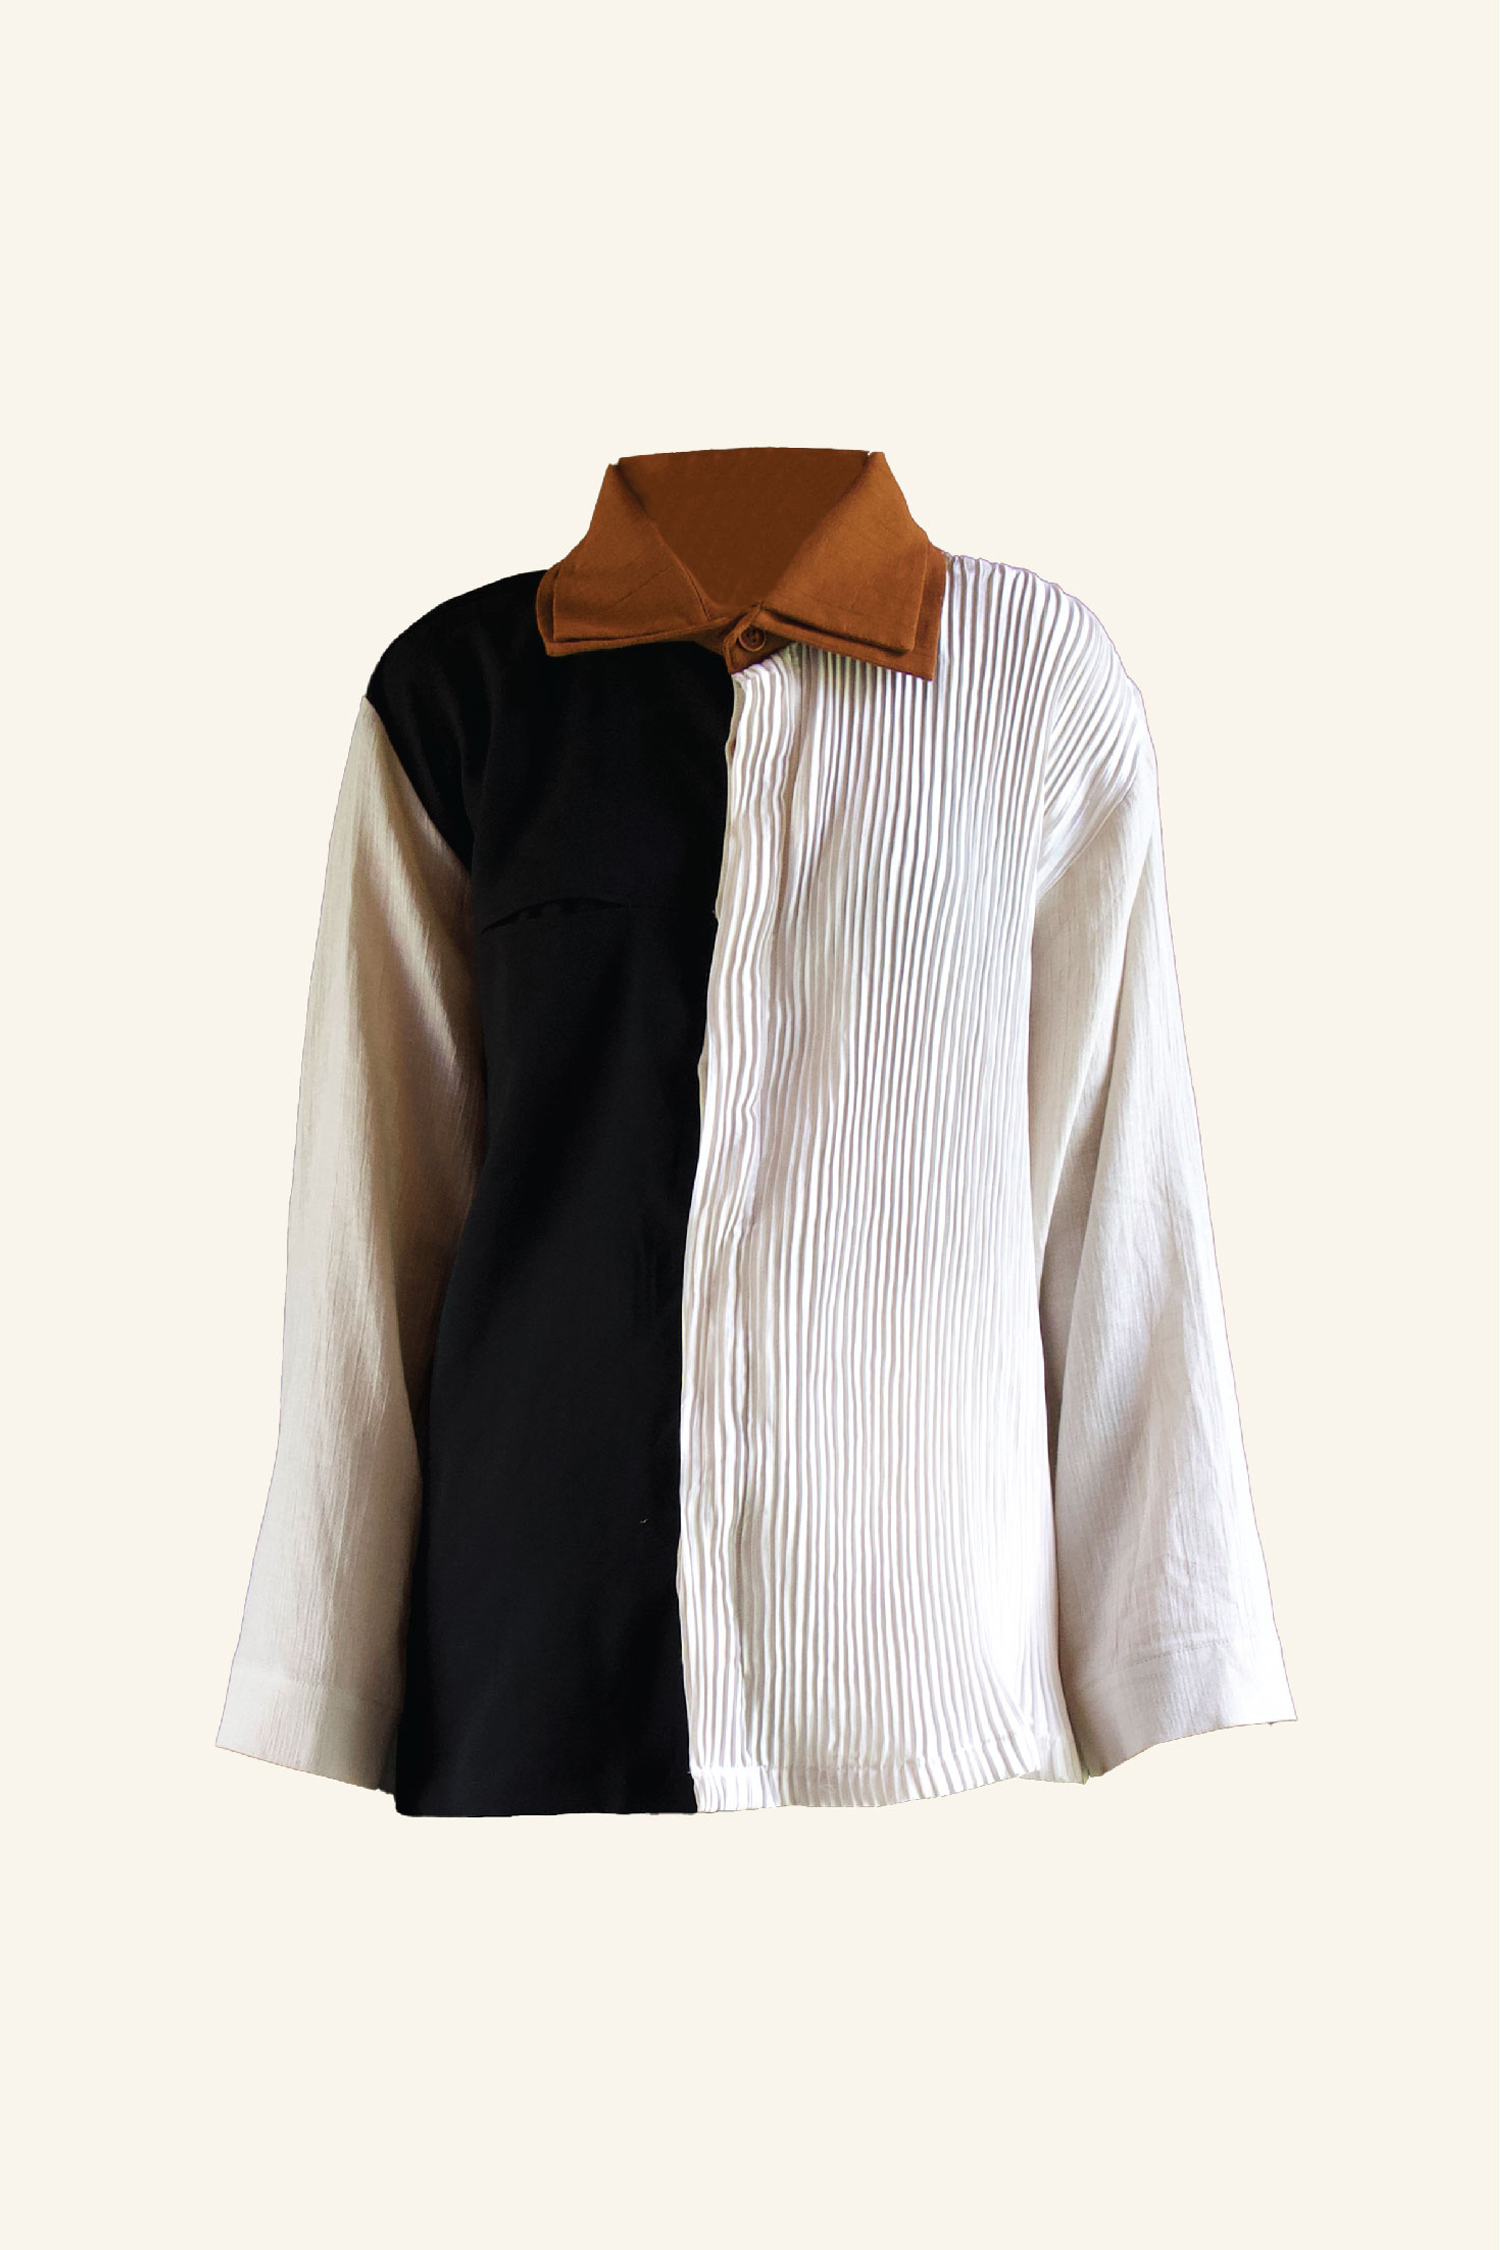 SATUSAJA Long-Sleeve Shirt 03